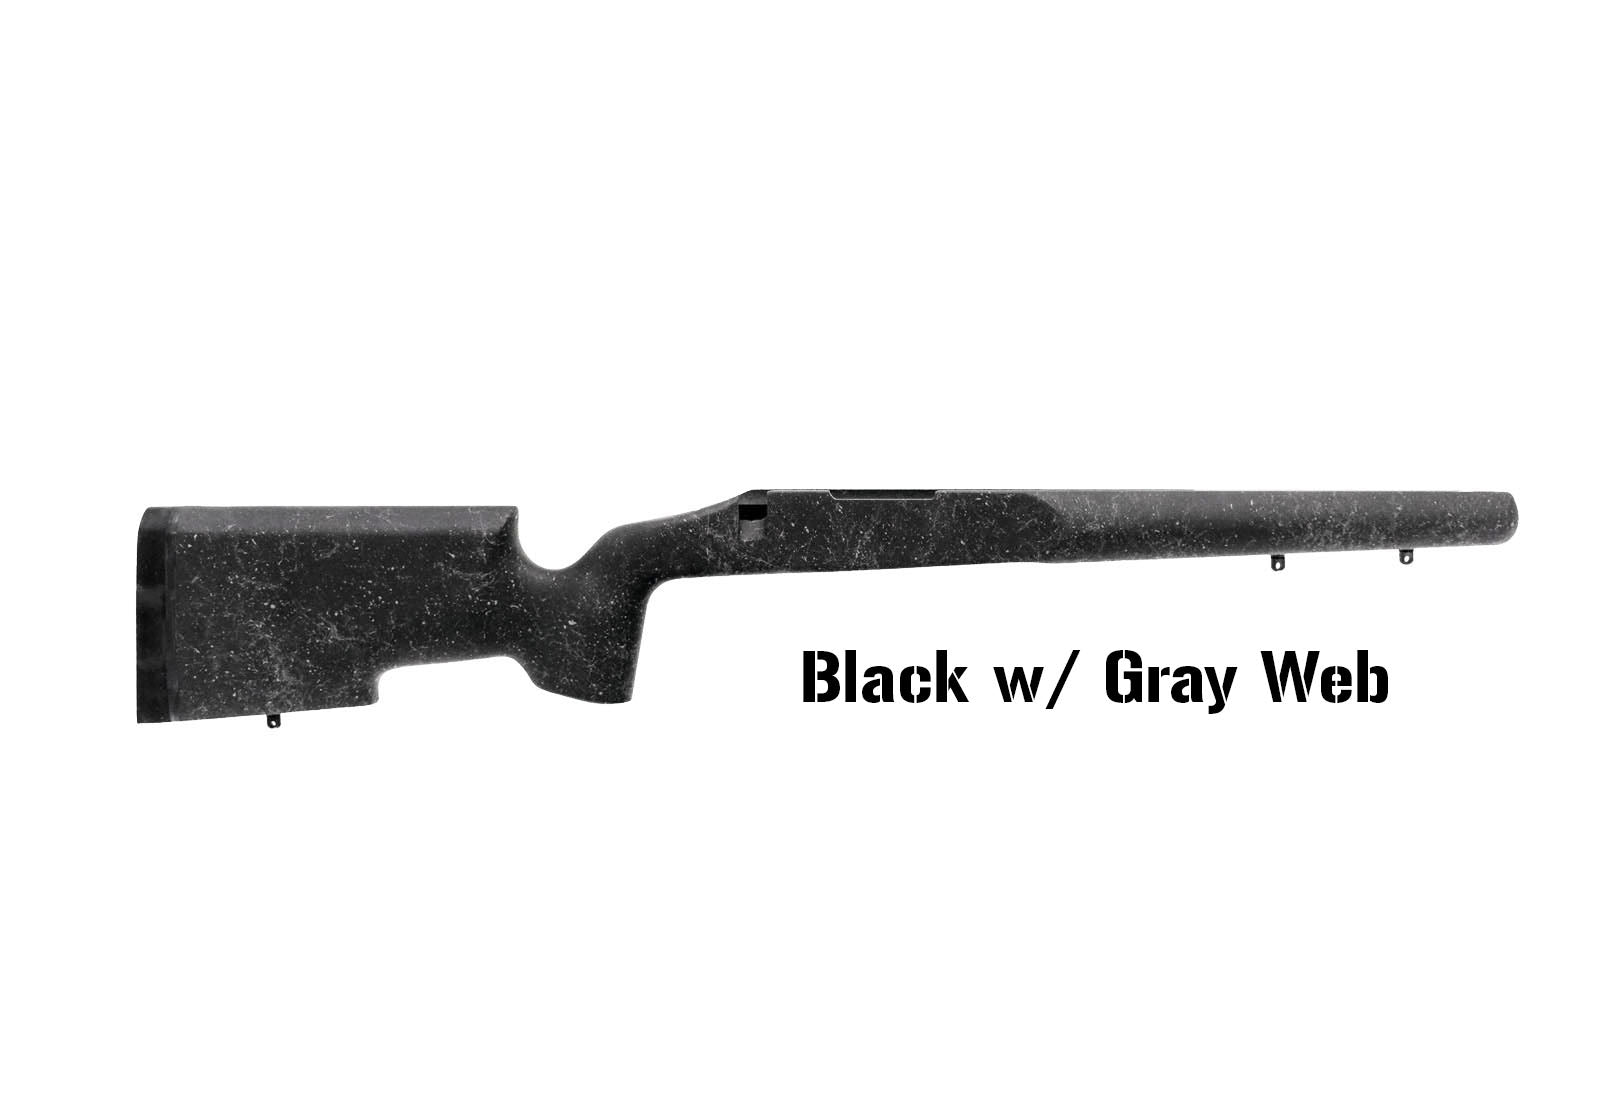 Renegade - Right Hand Rem 700 Short action, M5, Remington Varmint/Sendero barrel.  Painted Black w/ Gray Web.